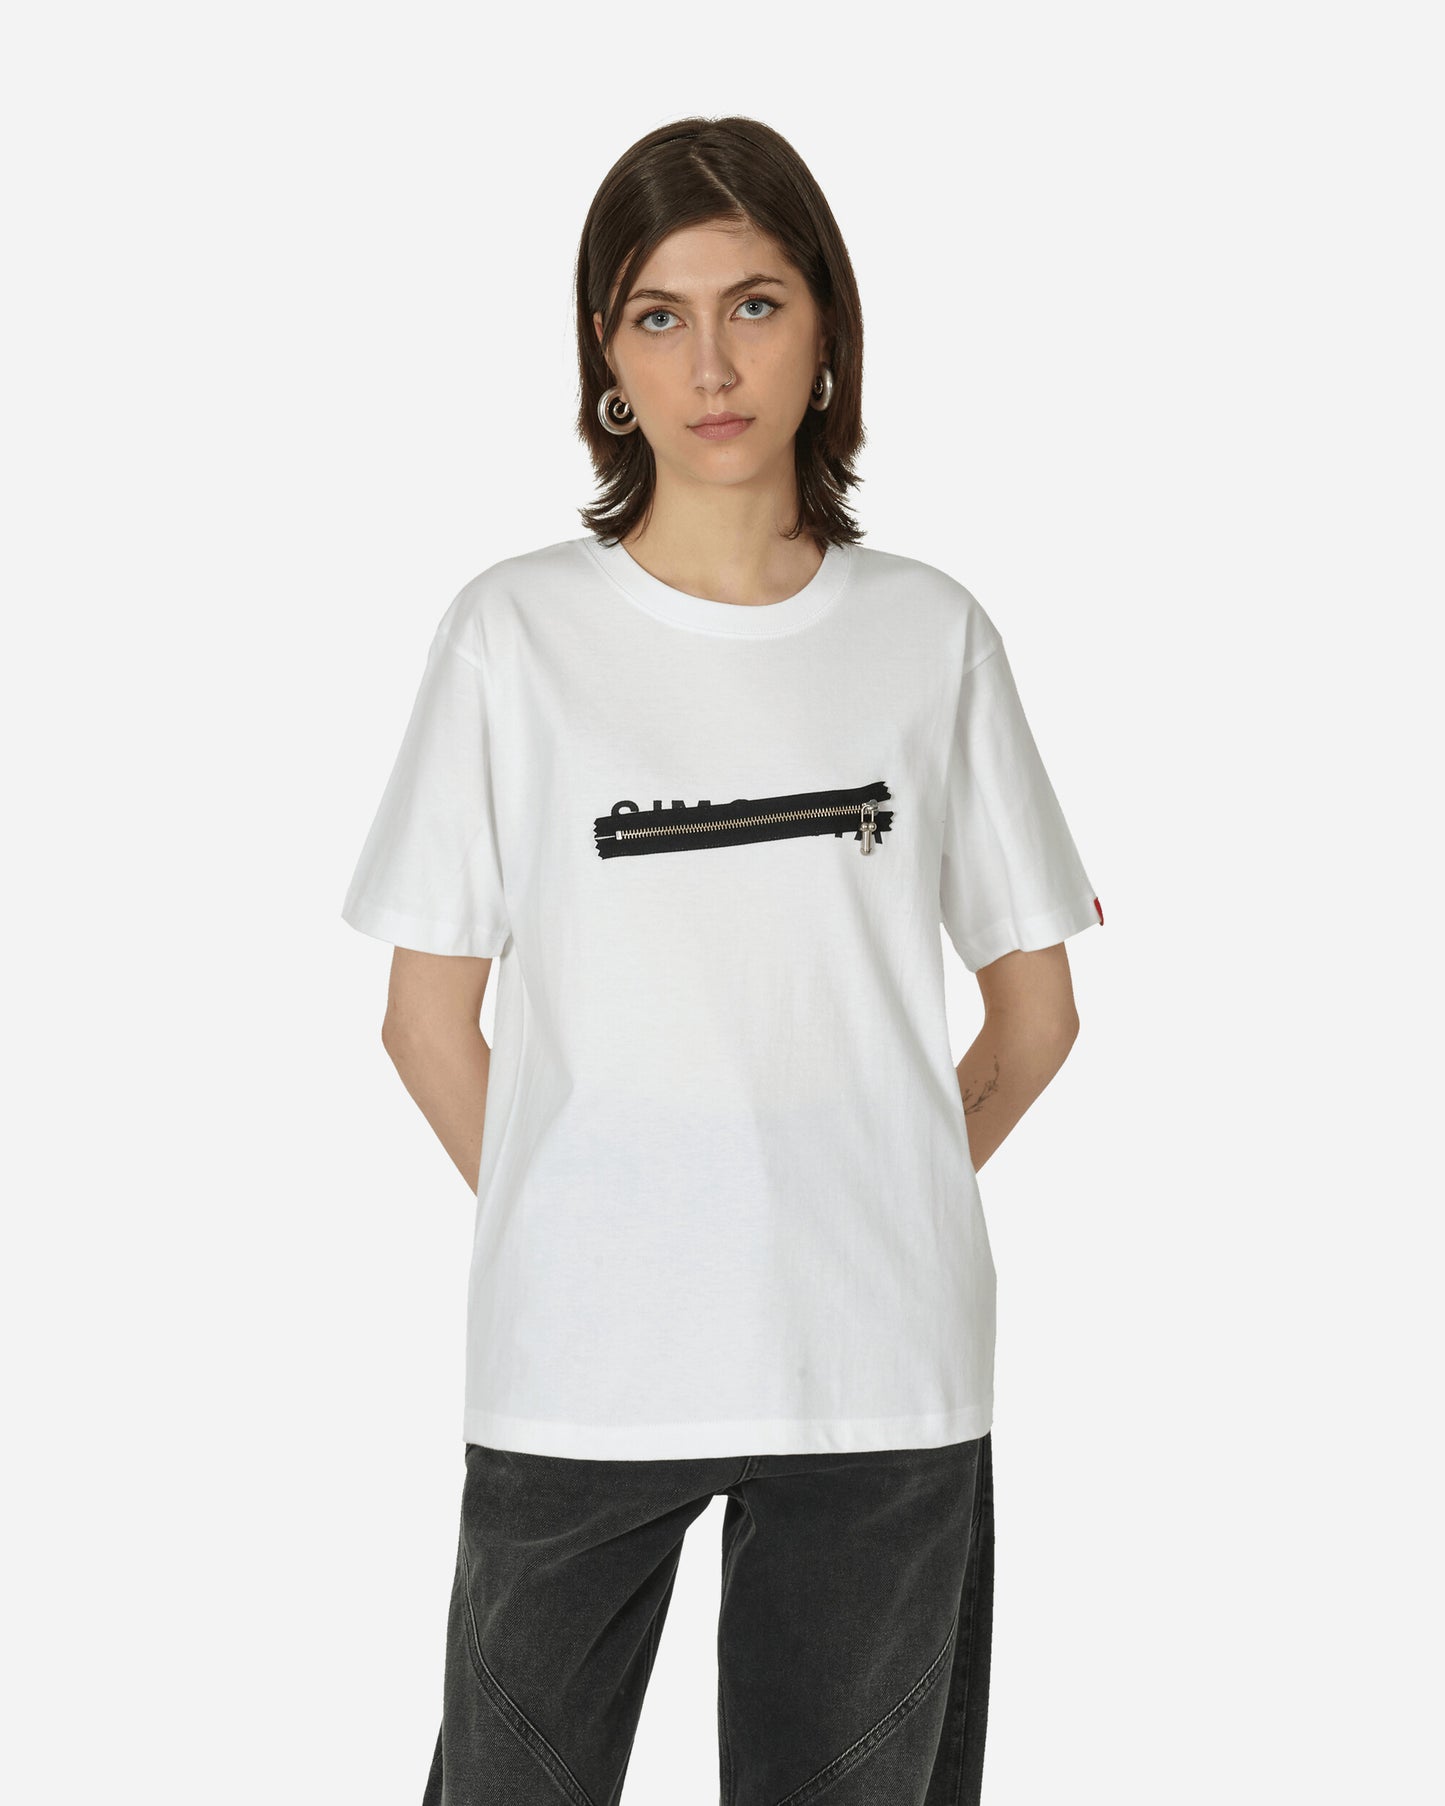 Phingerin P-Zip Tee Si White T-Shirts Shortsleeve PD-241-CS-081 A